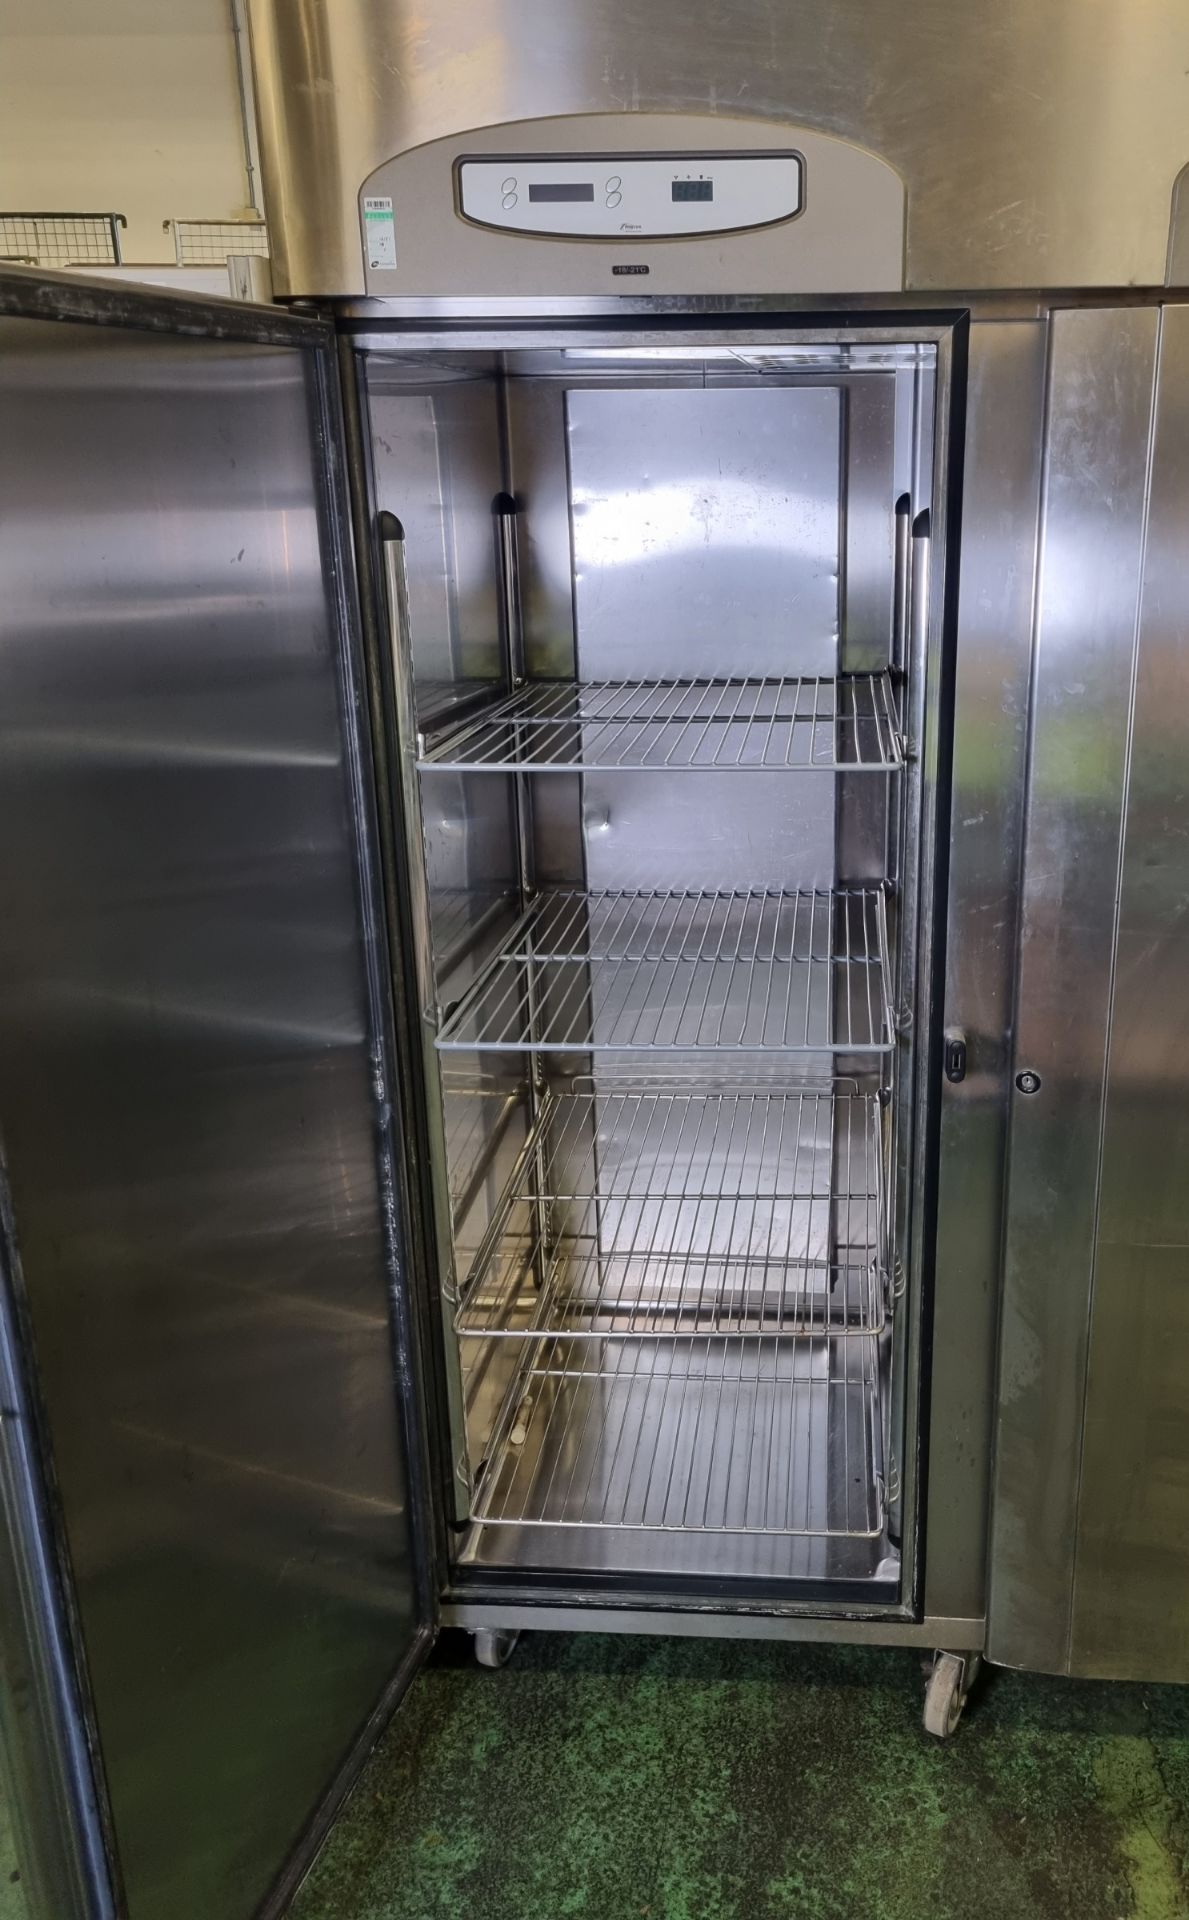 Foster PREMG1350L Stainless steel double door upright freezer - 1350 litre capacity - Image 3 of 3